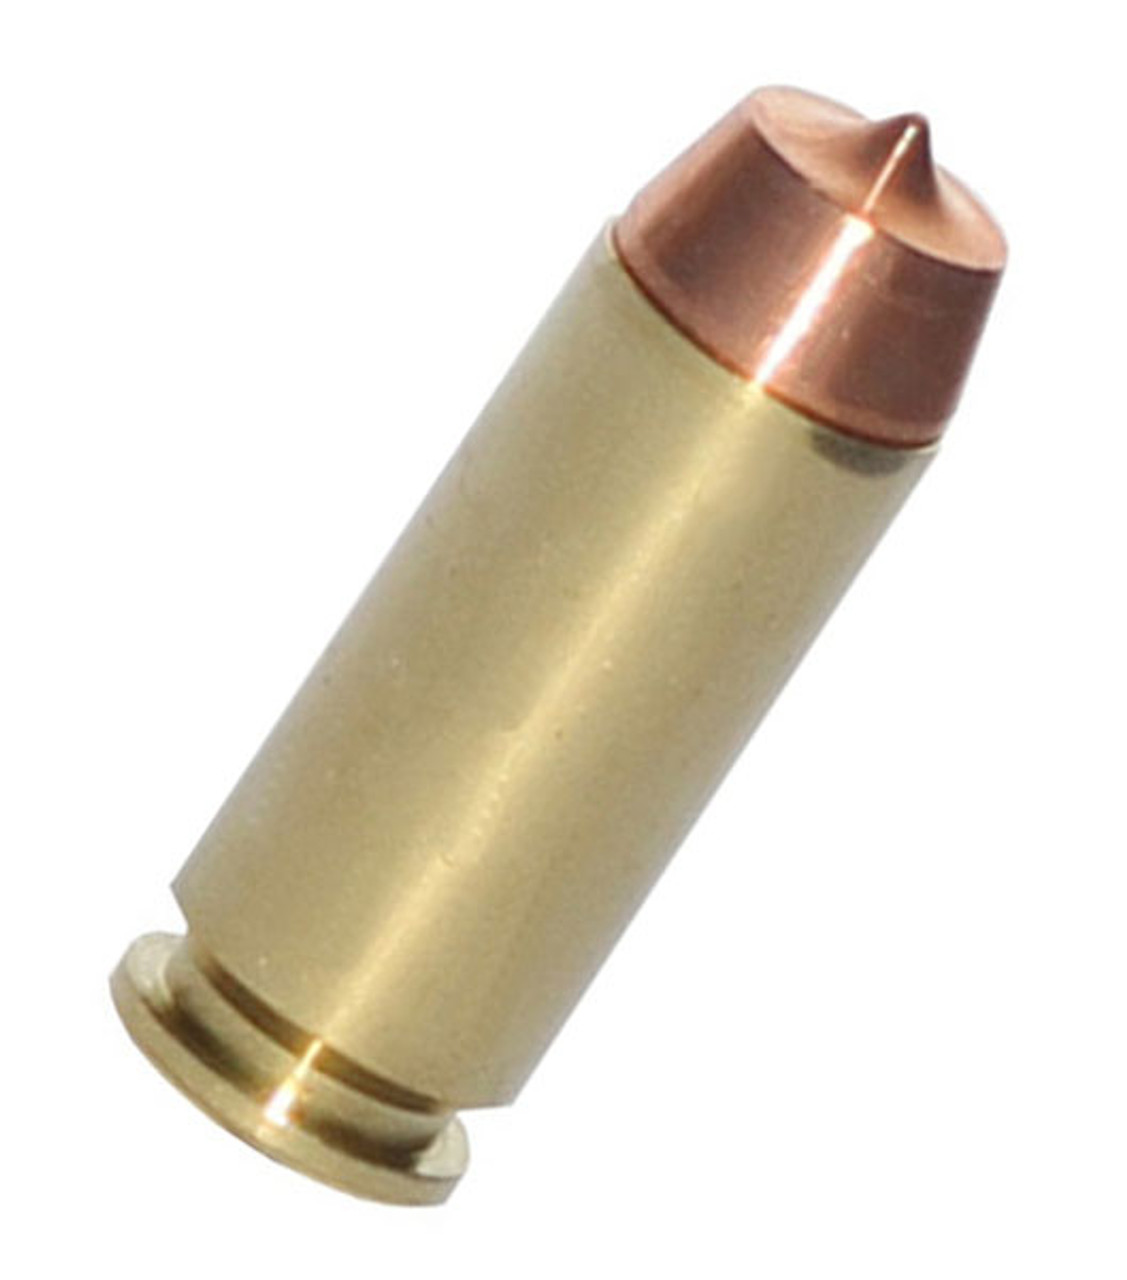 9mm and 45 acp ammunition : r/ThingsCutInHalfPorn